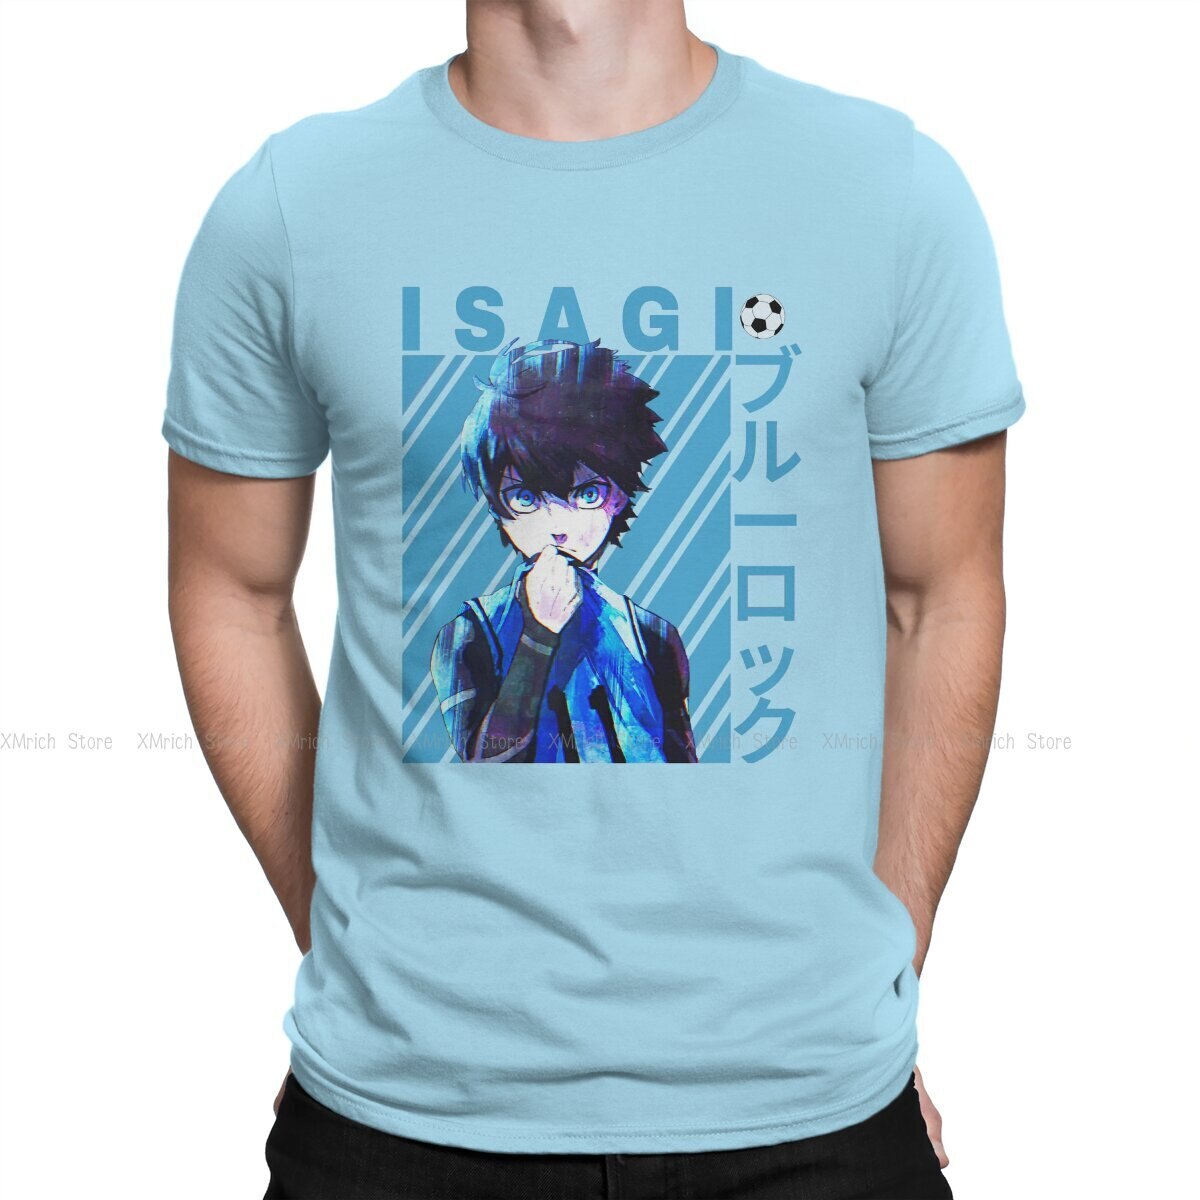 Men's Cool T Shirts BLUE LOCK Isagi Yoichi Anime 100% Cotton Clothing Casual Short Sleeve Crew Neck Tees Graphic T-Shirt, everythinganimee